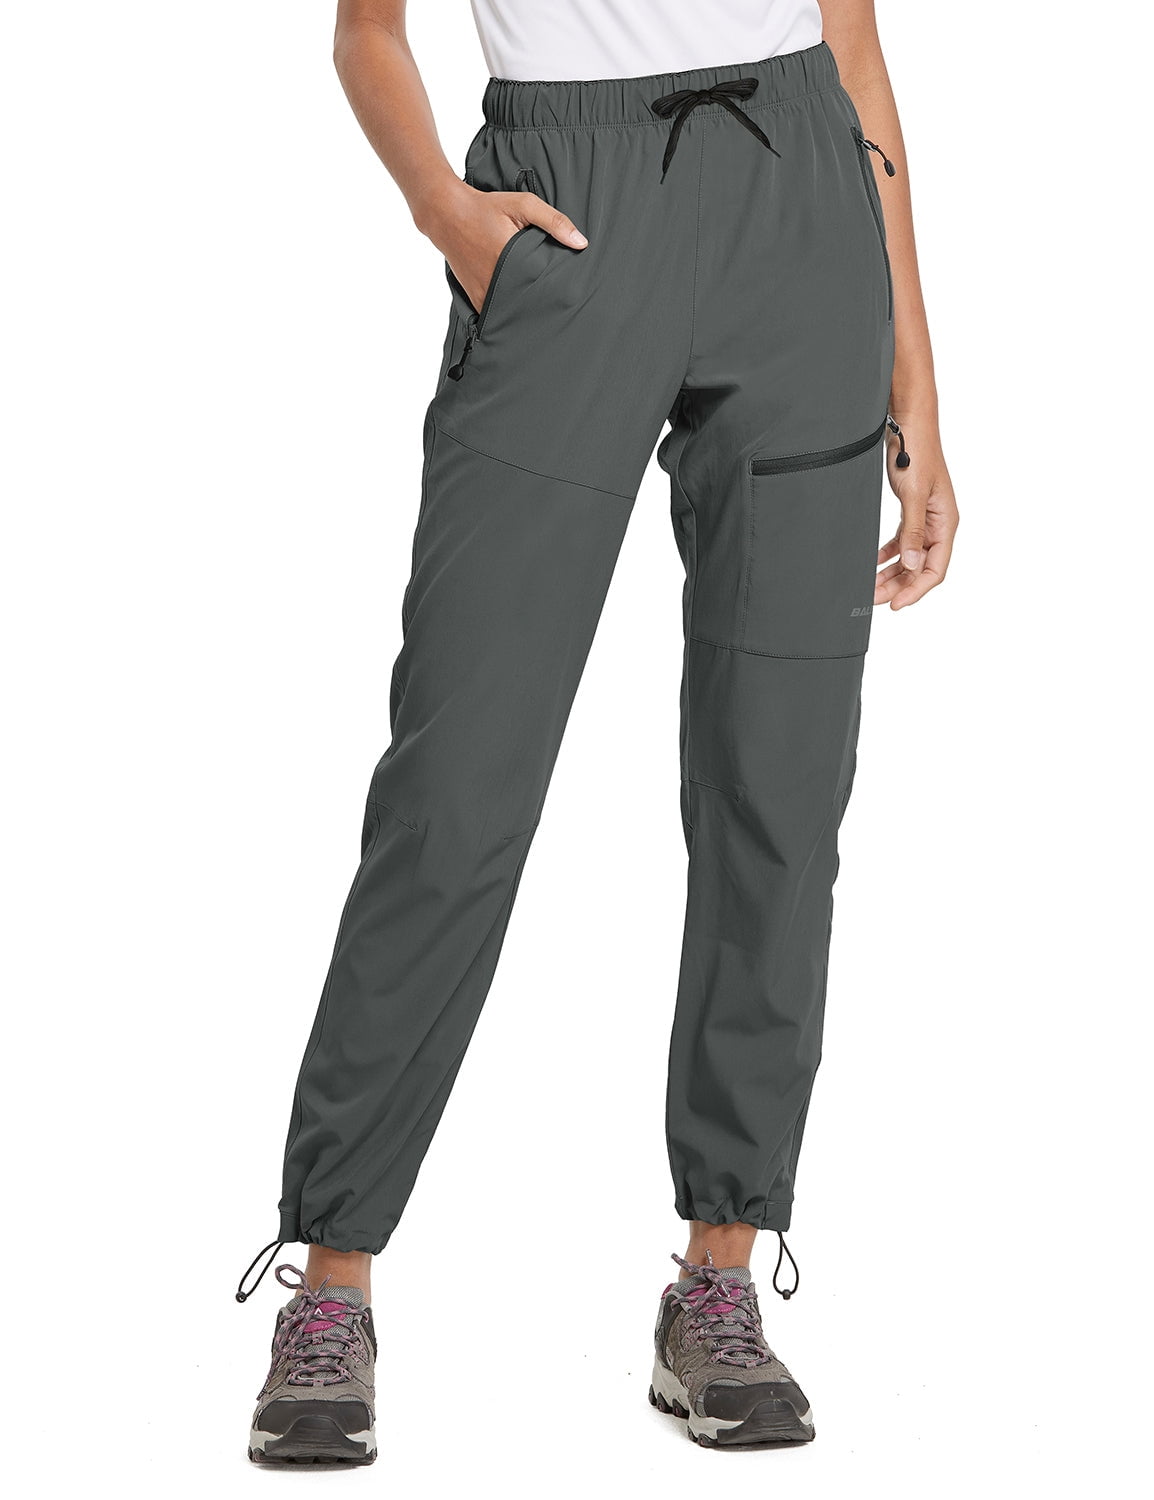 BALEAF Cargo Pants For Women Quick Dry Water Resistant With 4 Zip-Closure  Pockets Elastic Waist Steel Gray Medium